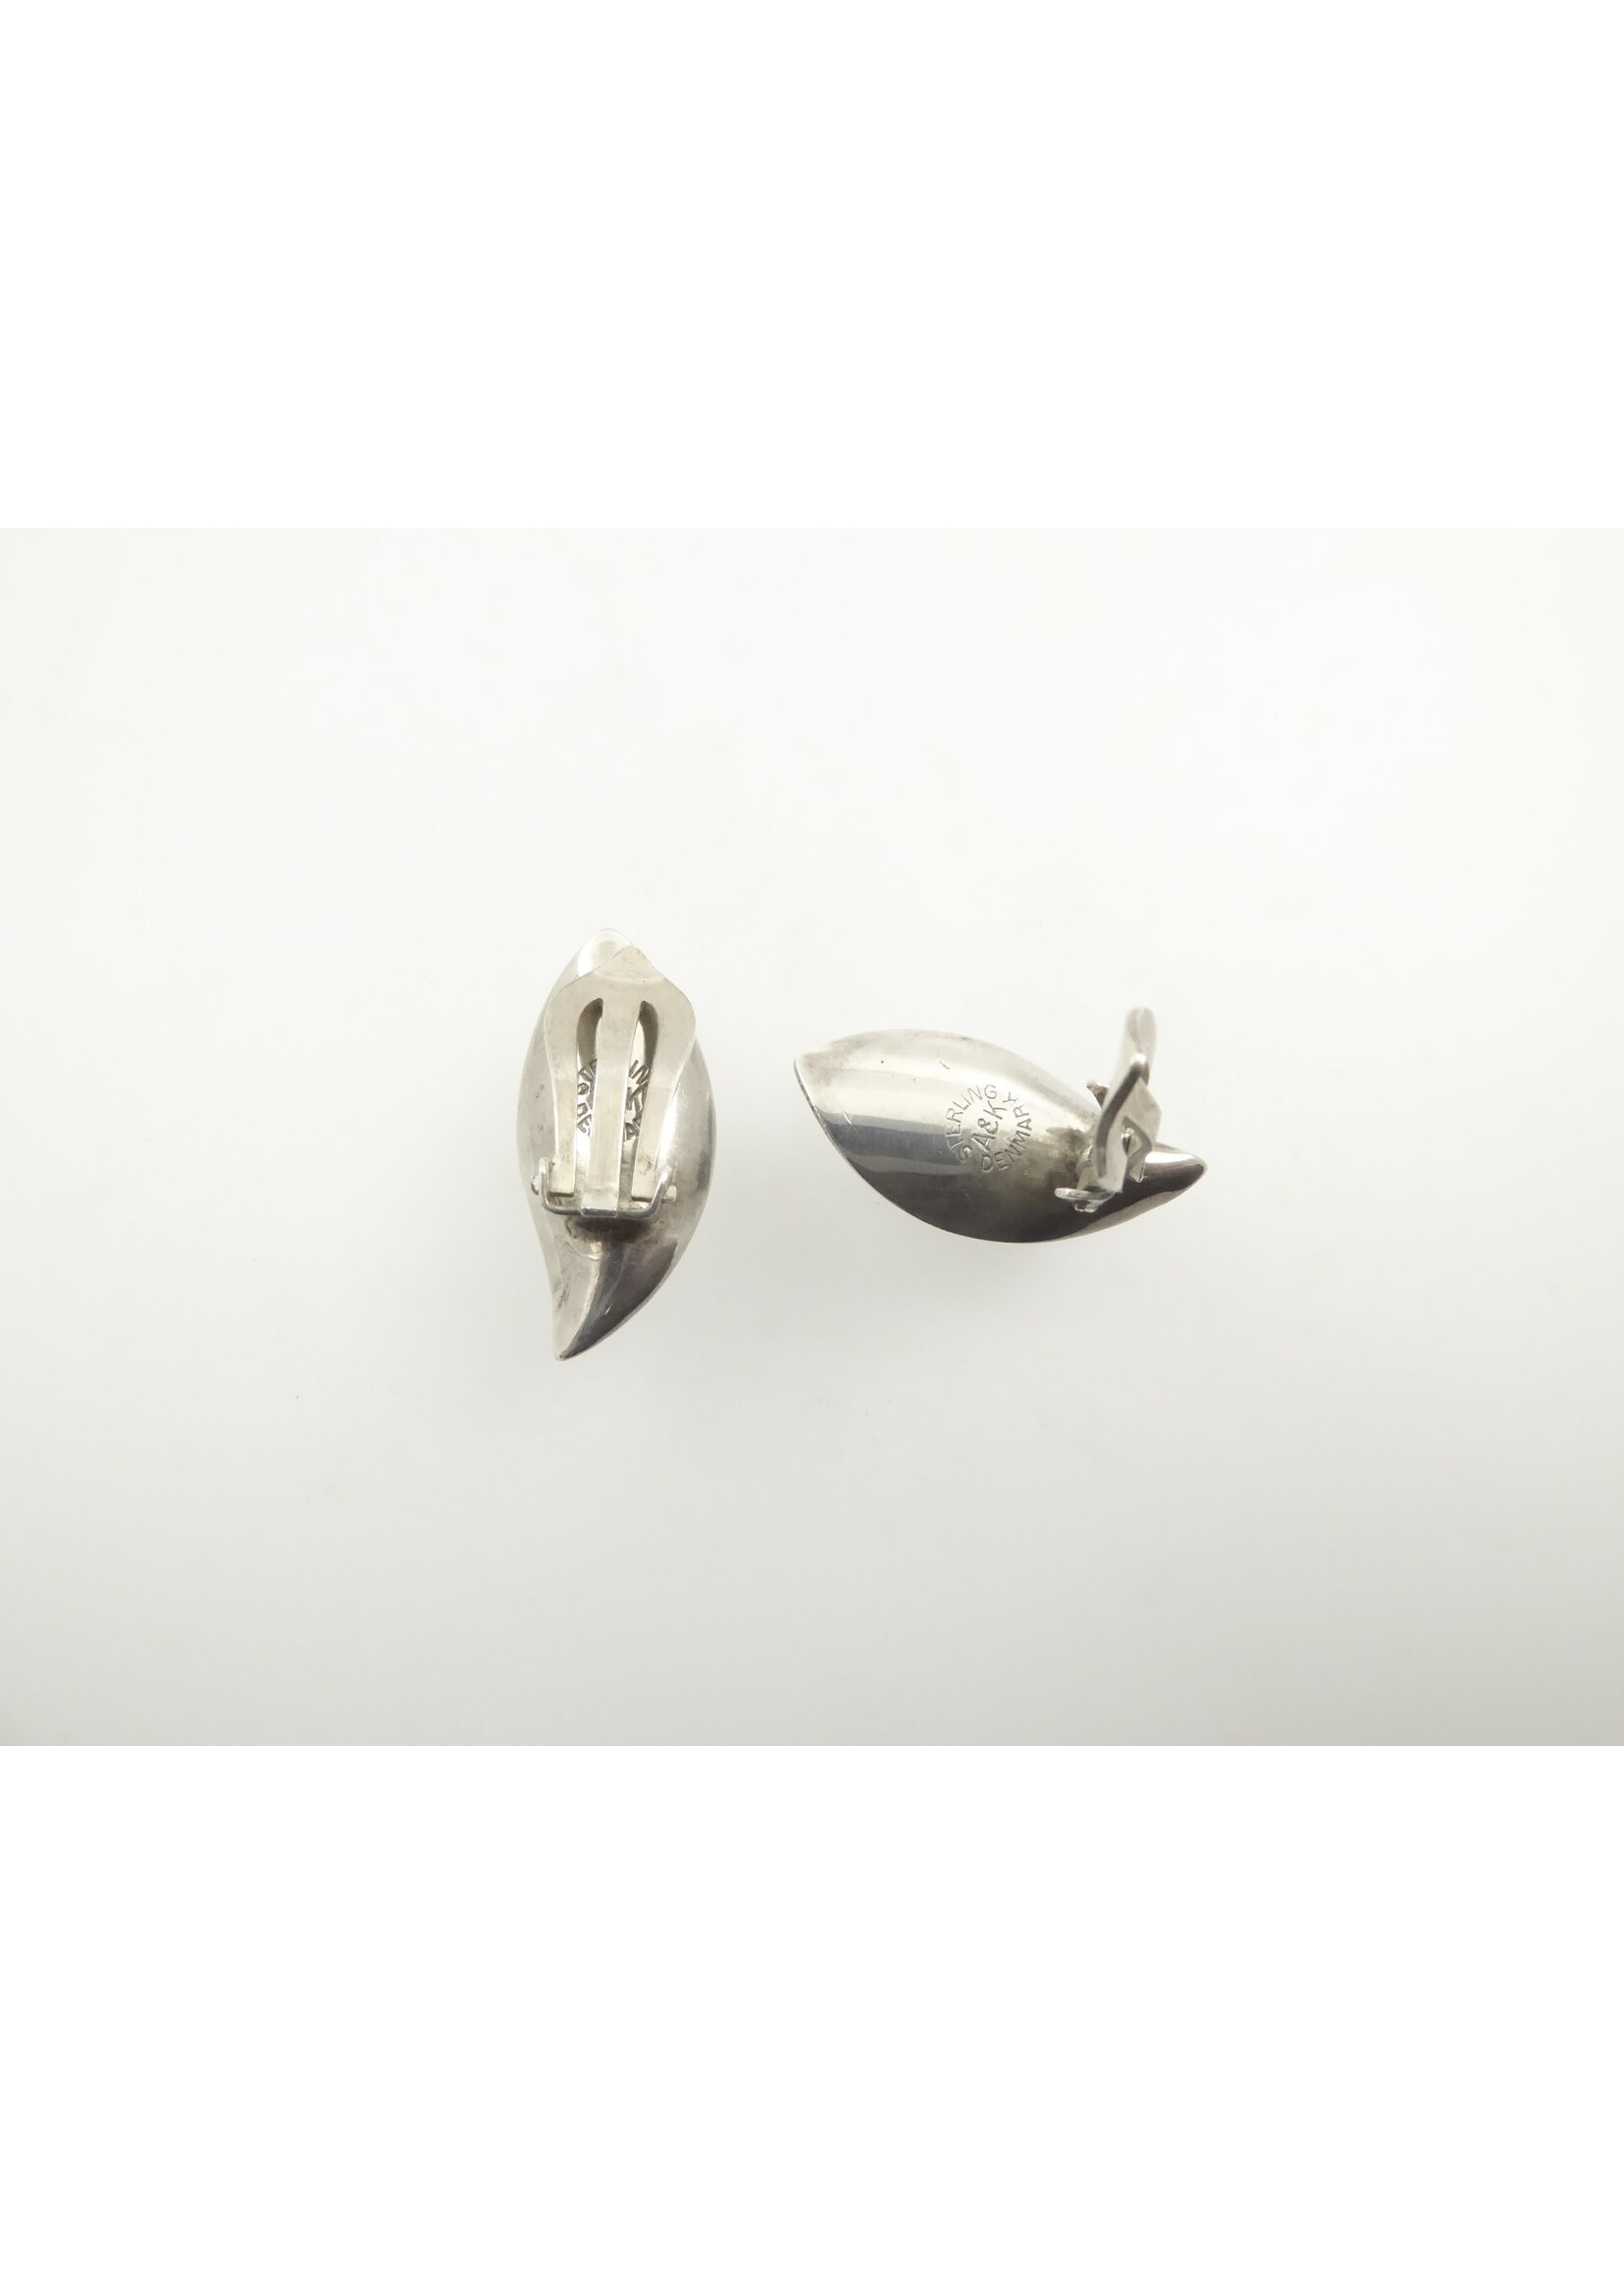 Lisa Kramer Vintage Jewelry Danish Modernist Leaf Earrings